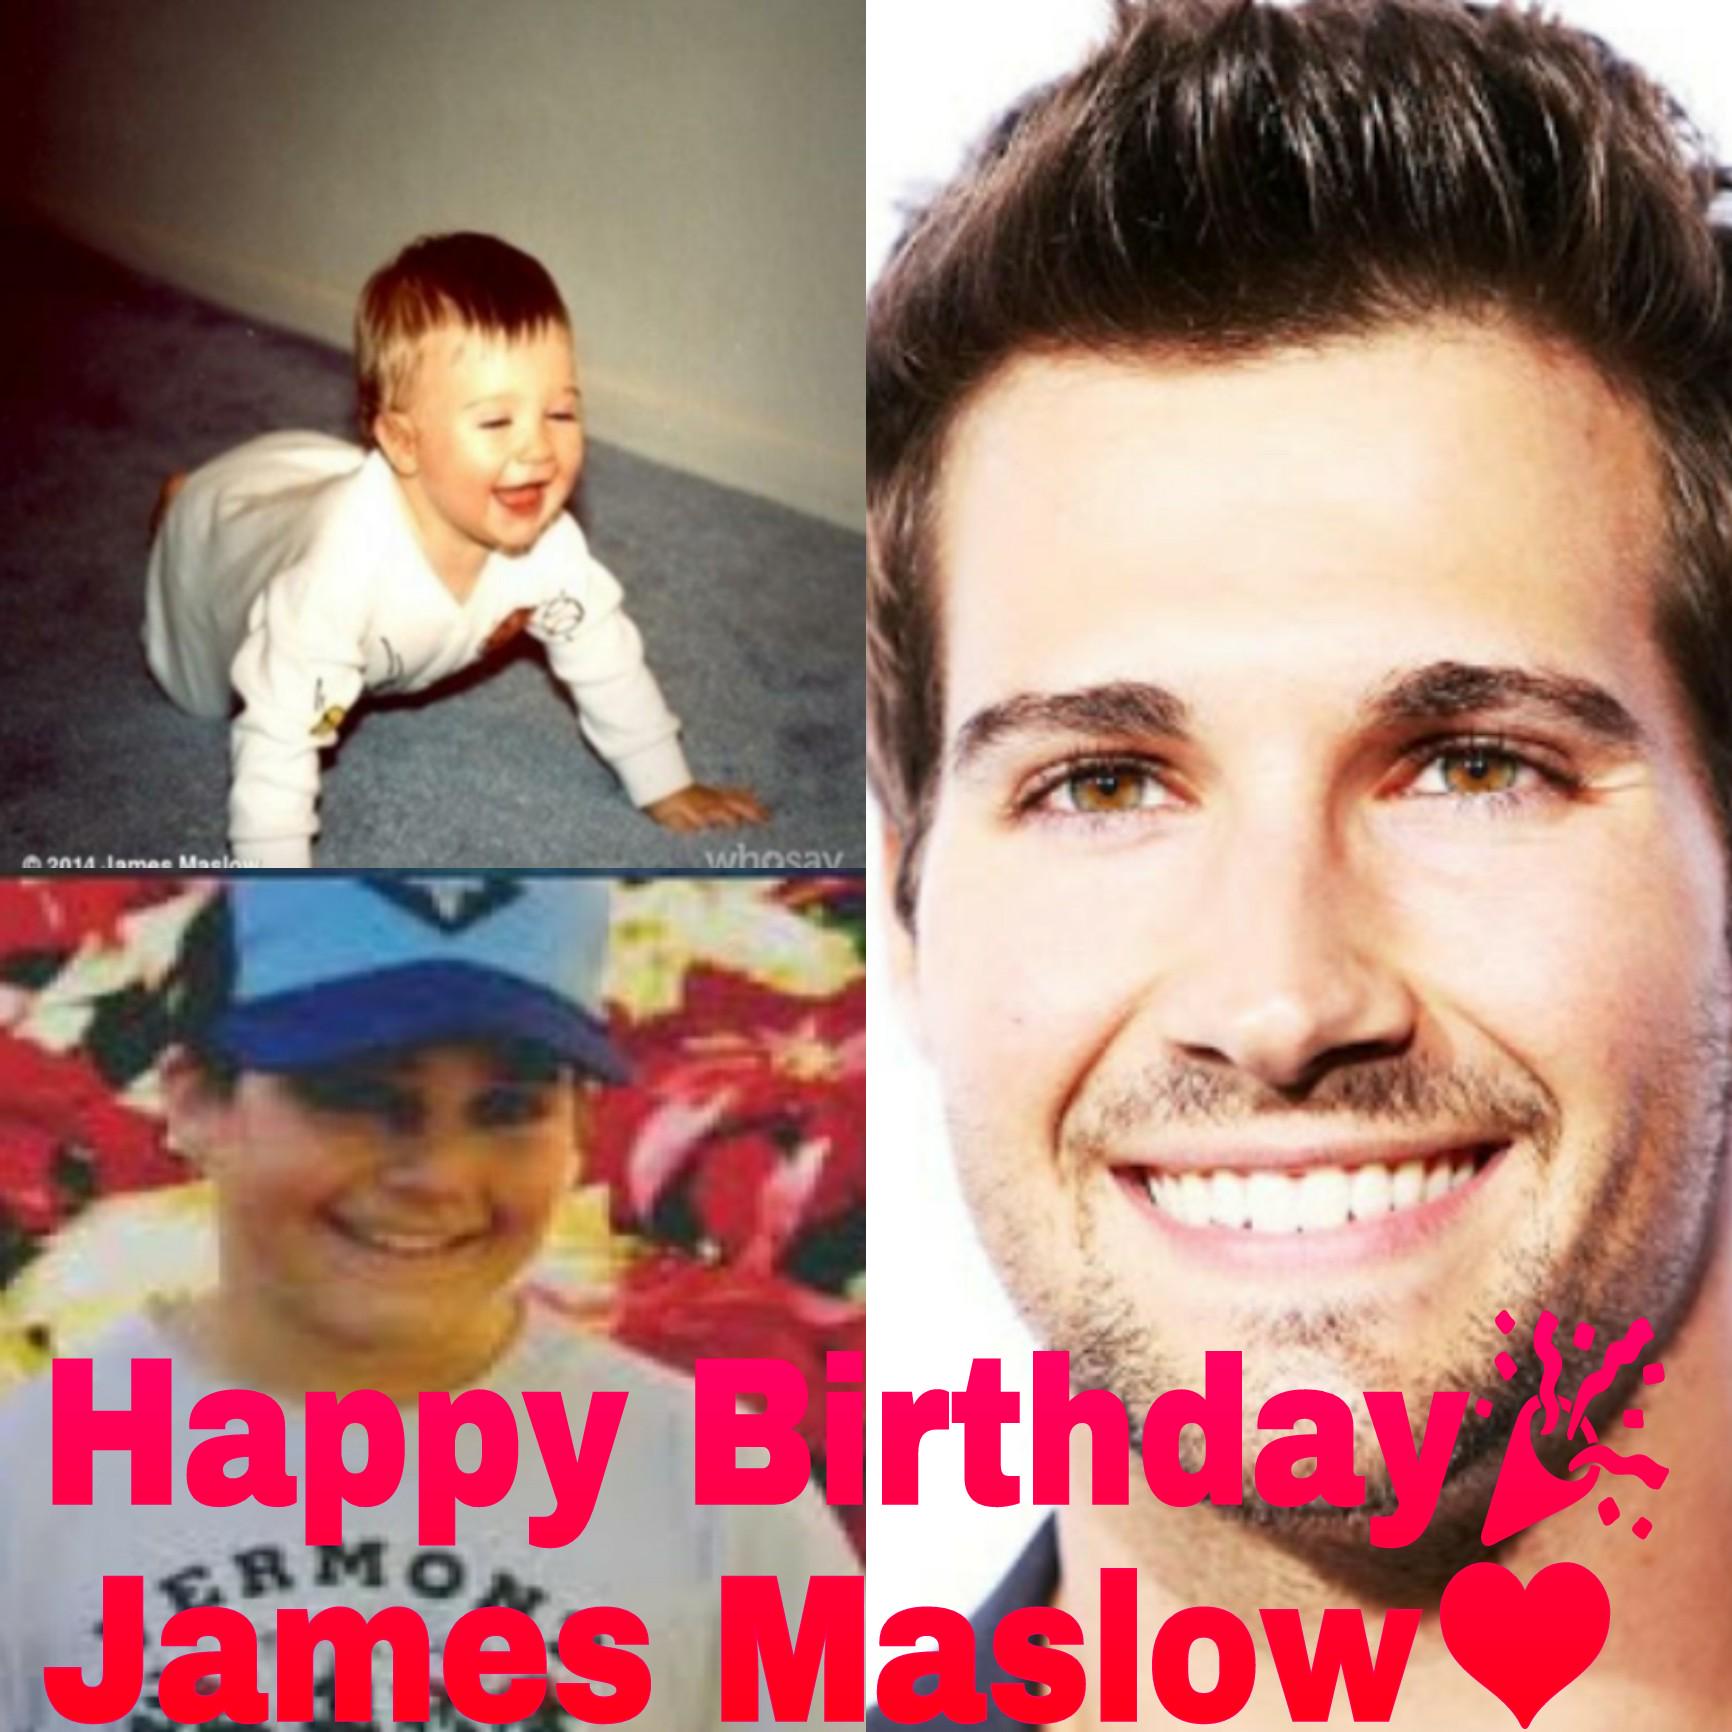  ¡HAPPY BIRTHDAY JAMES MASLOW! ¡I LOVE YOU!  